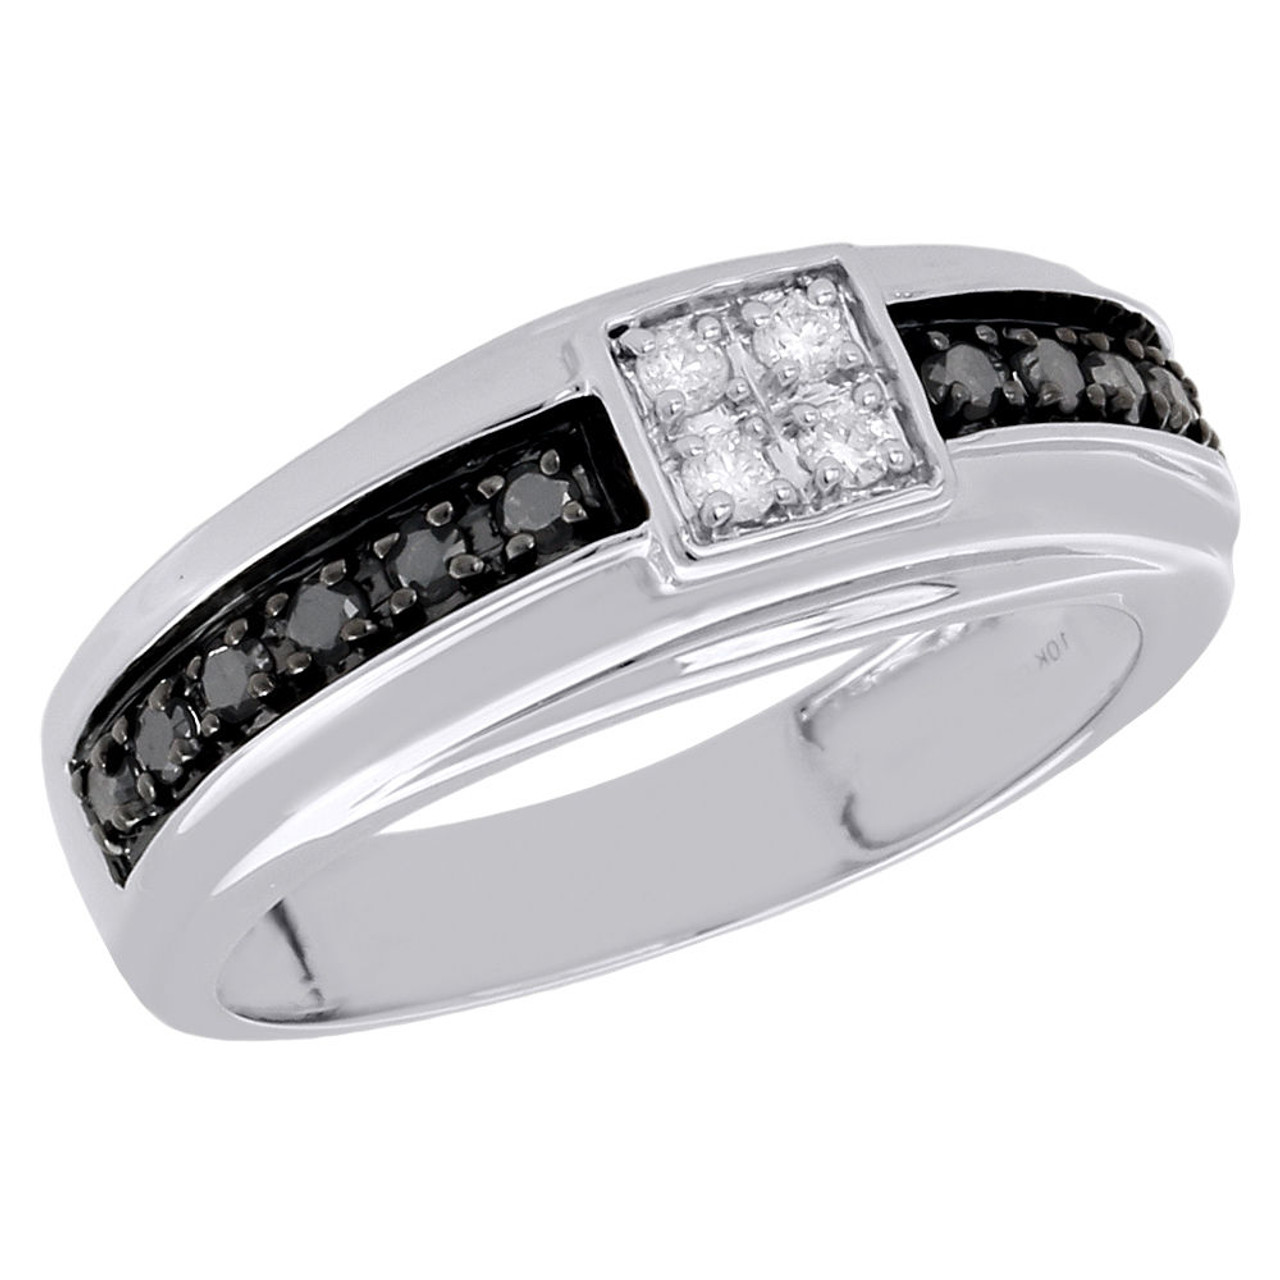 The Sophia Black Diamond Ring - Diamond Jewellery at Best Prices in India |  SarvadaJewels.com